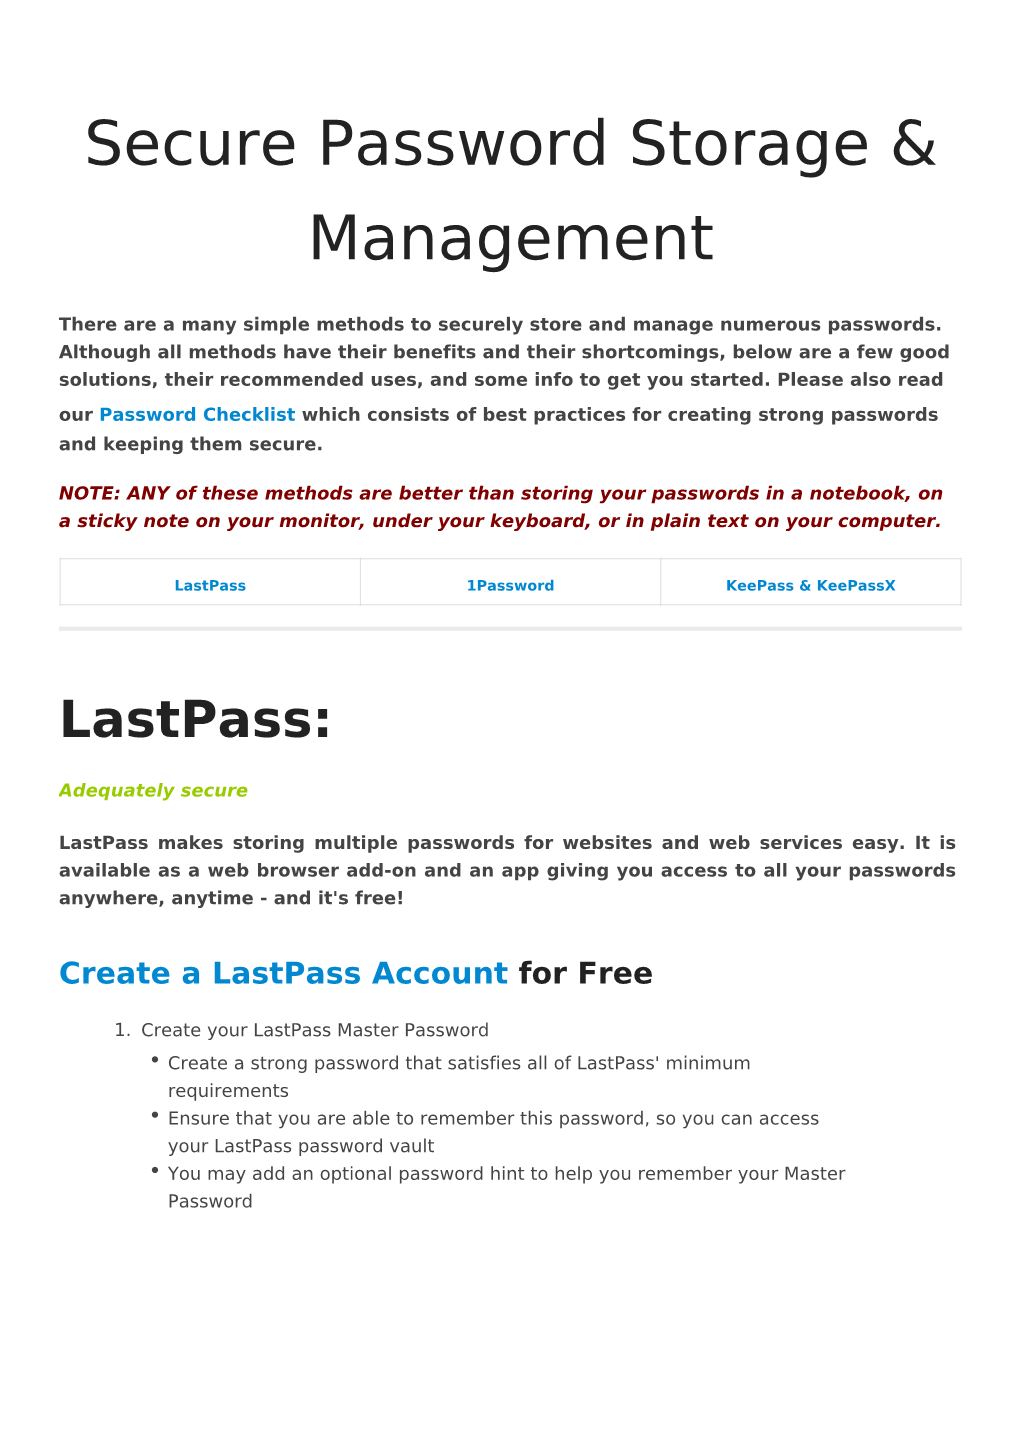 Secure Password Storage & Management